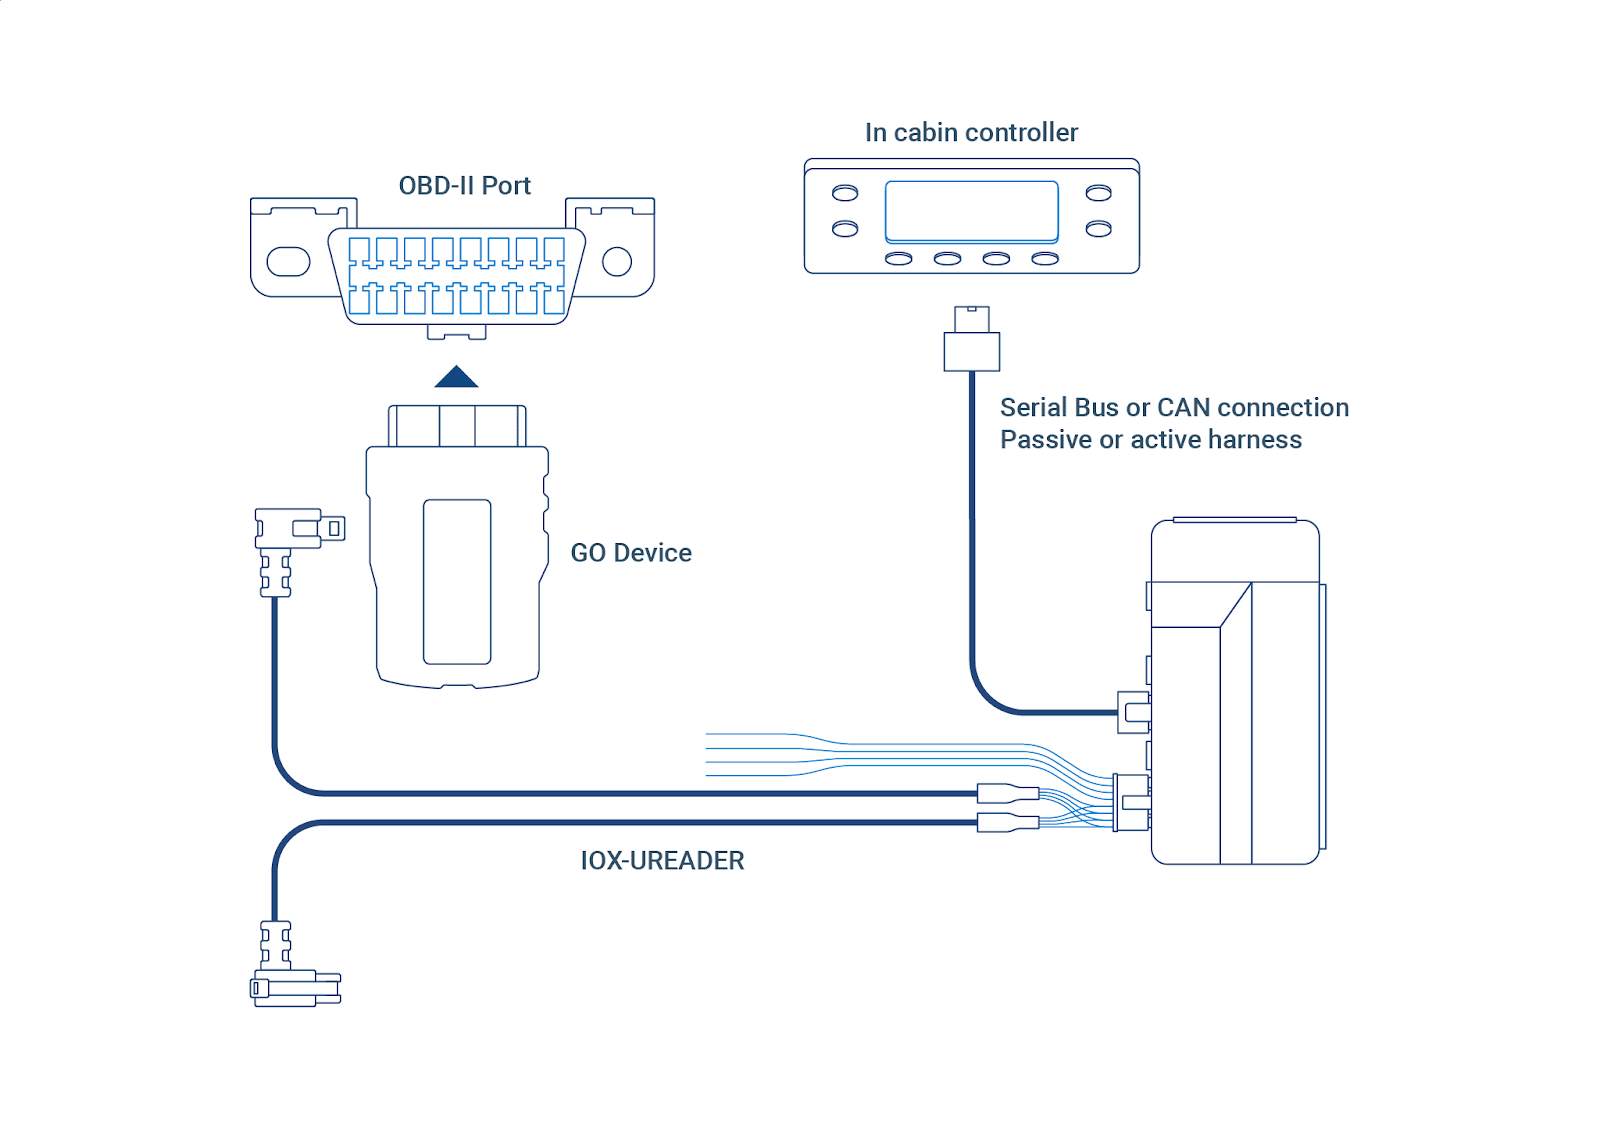 Diagram of IOX-UREADER installation using OBD II port (no IP box)